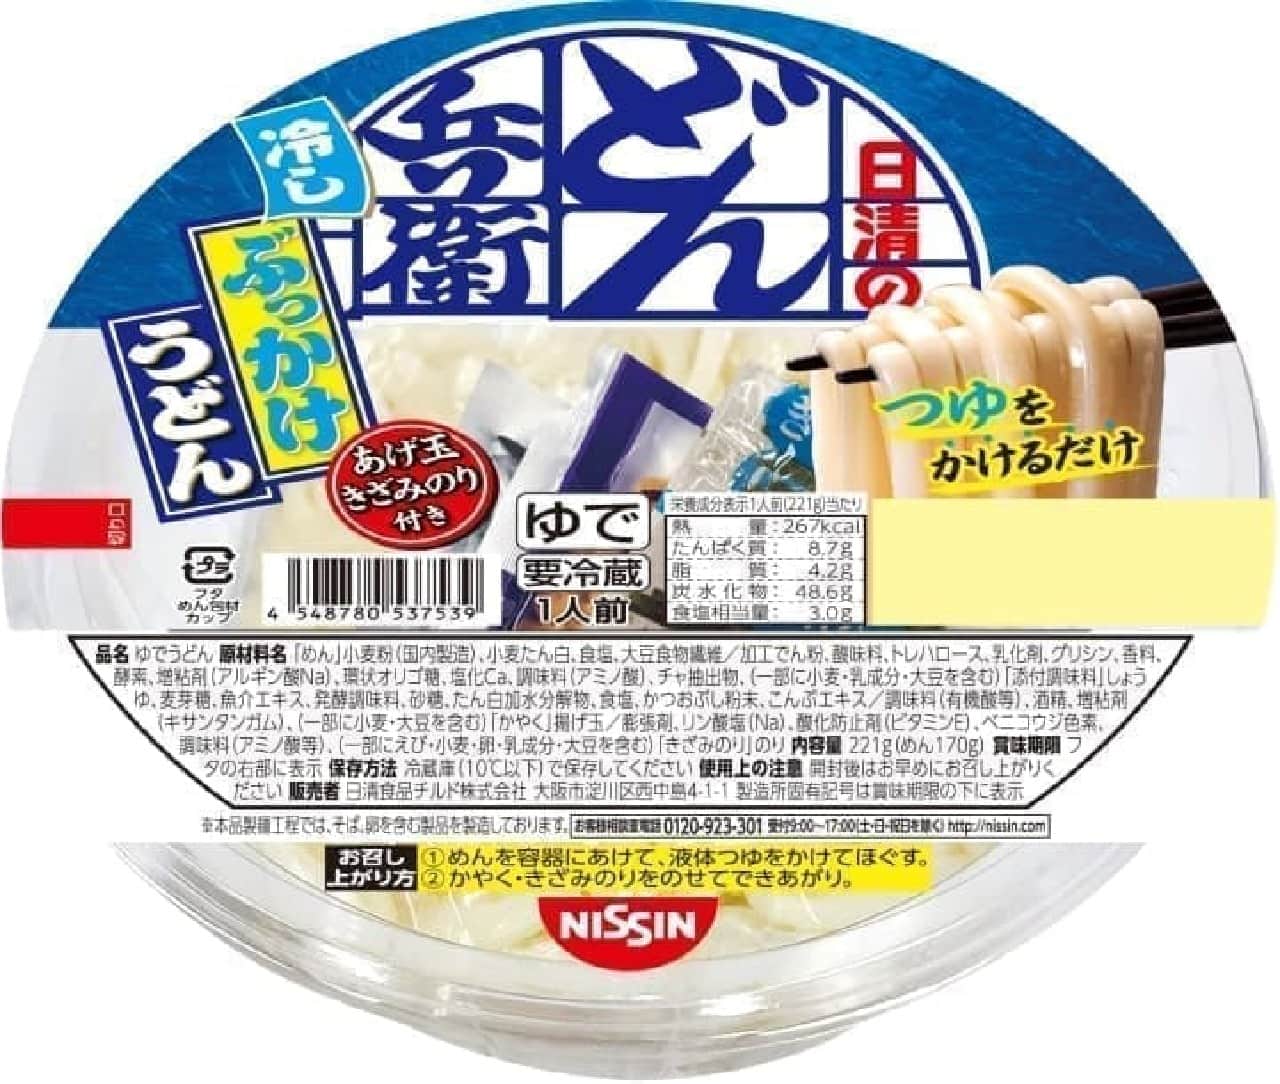 Nissin Foods "Chilled Cup Nissin Donbei Cold Bukkake Udon"